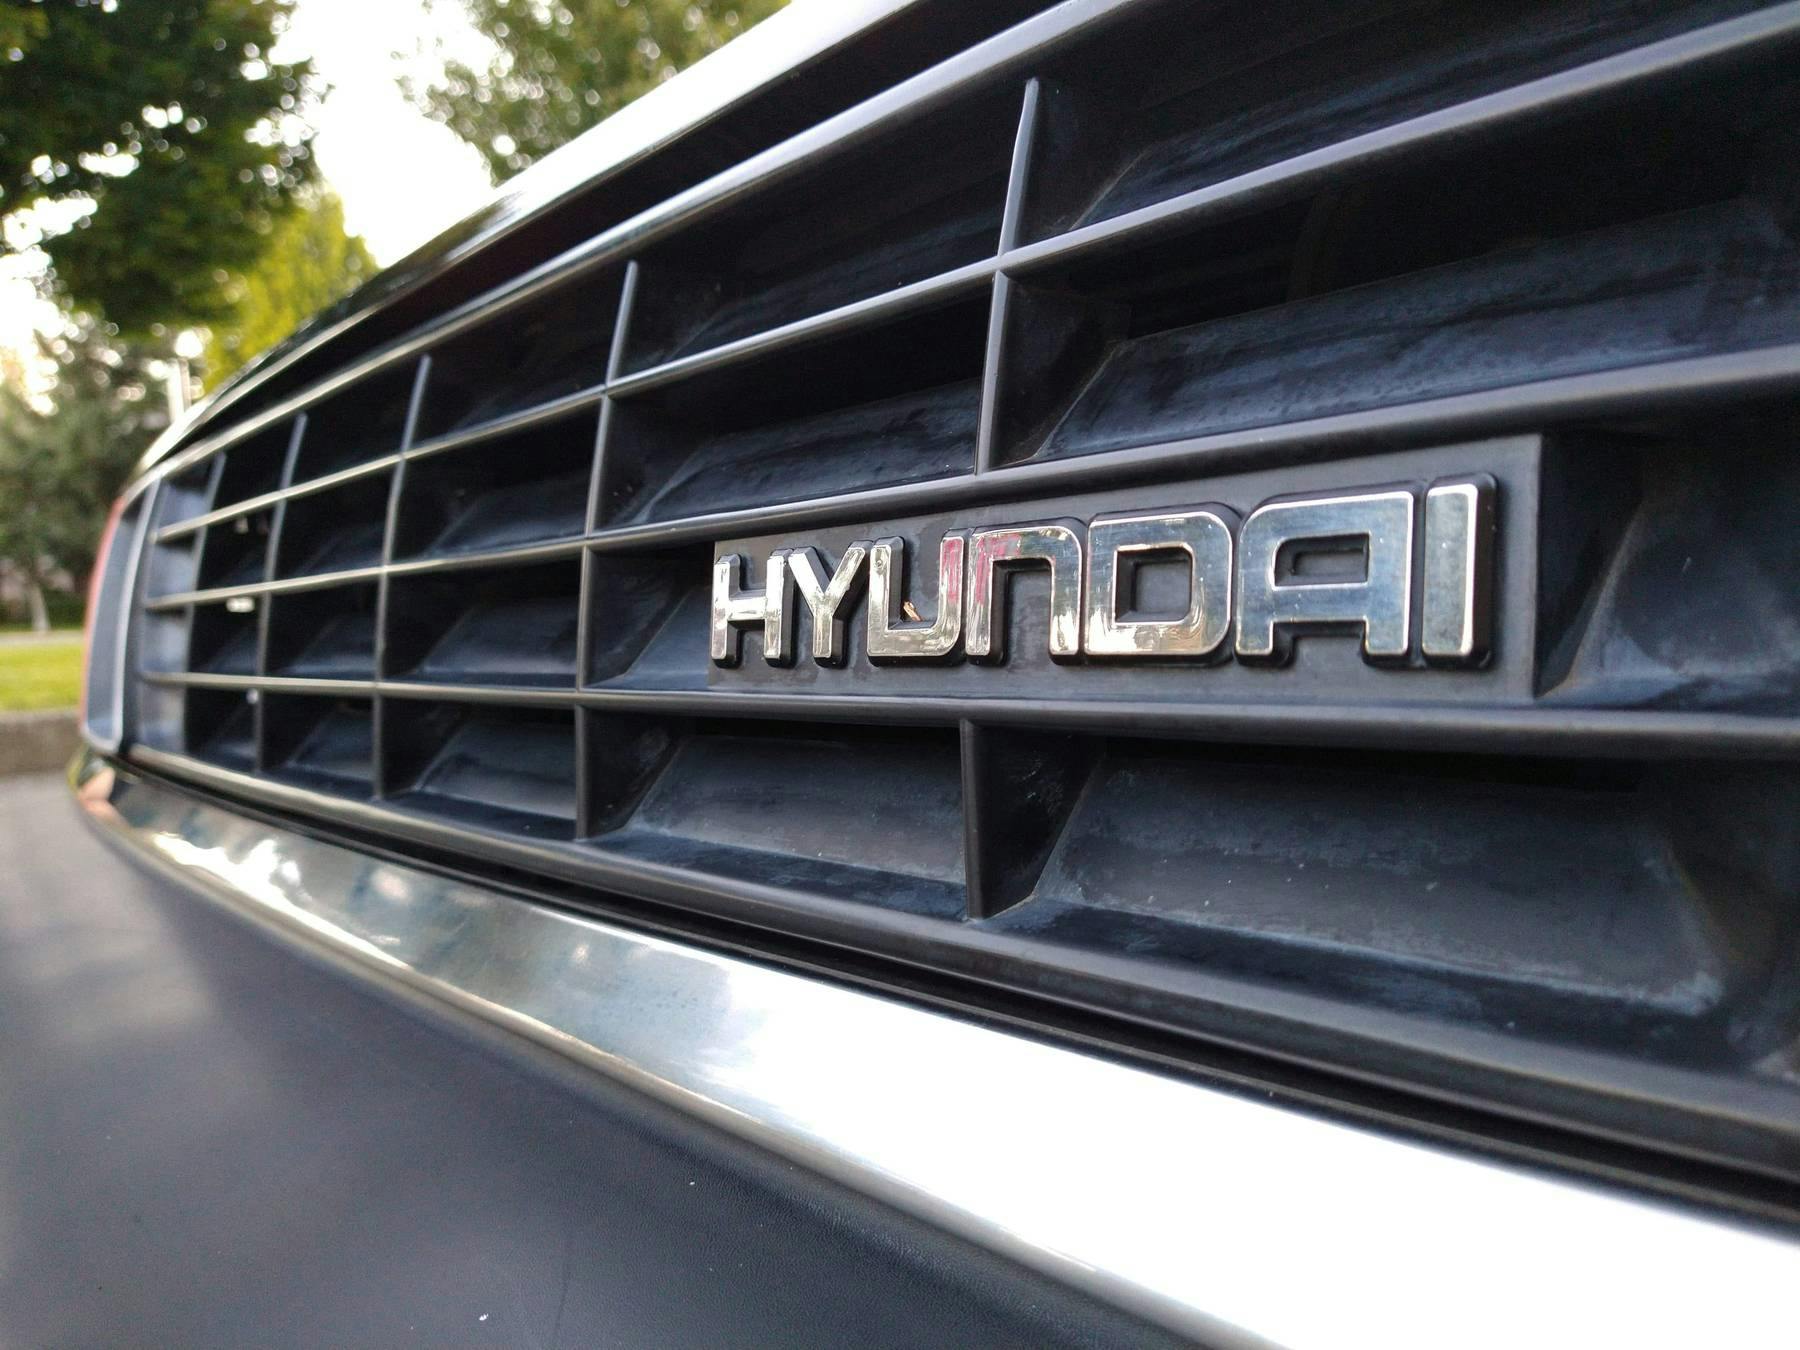 1986 Hyundai Stellar Executive front grille emblem